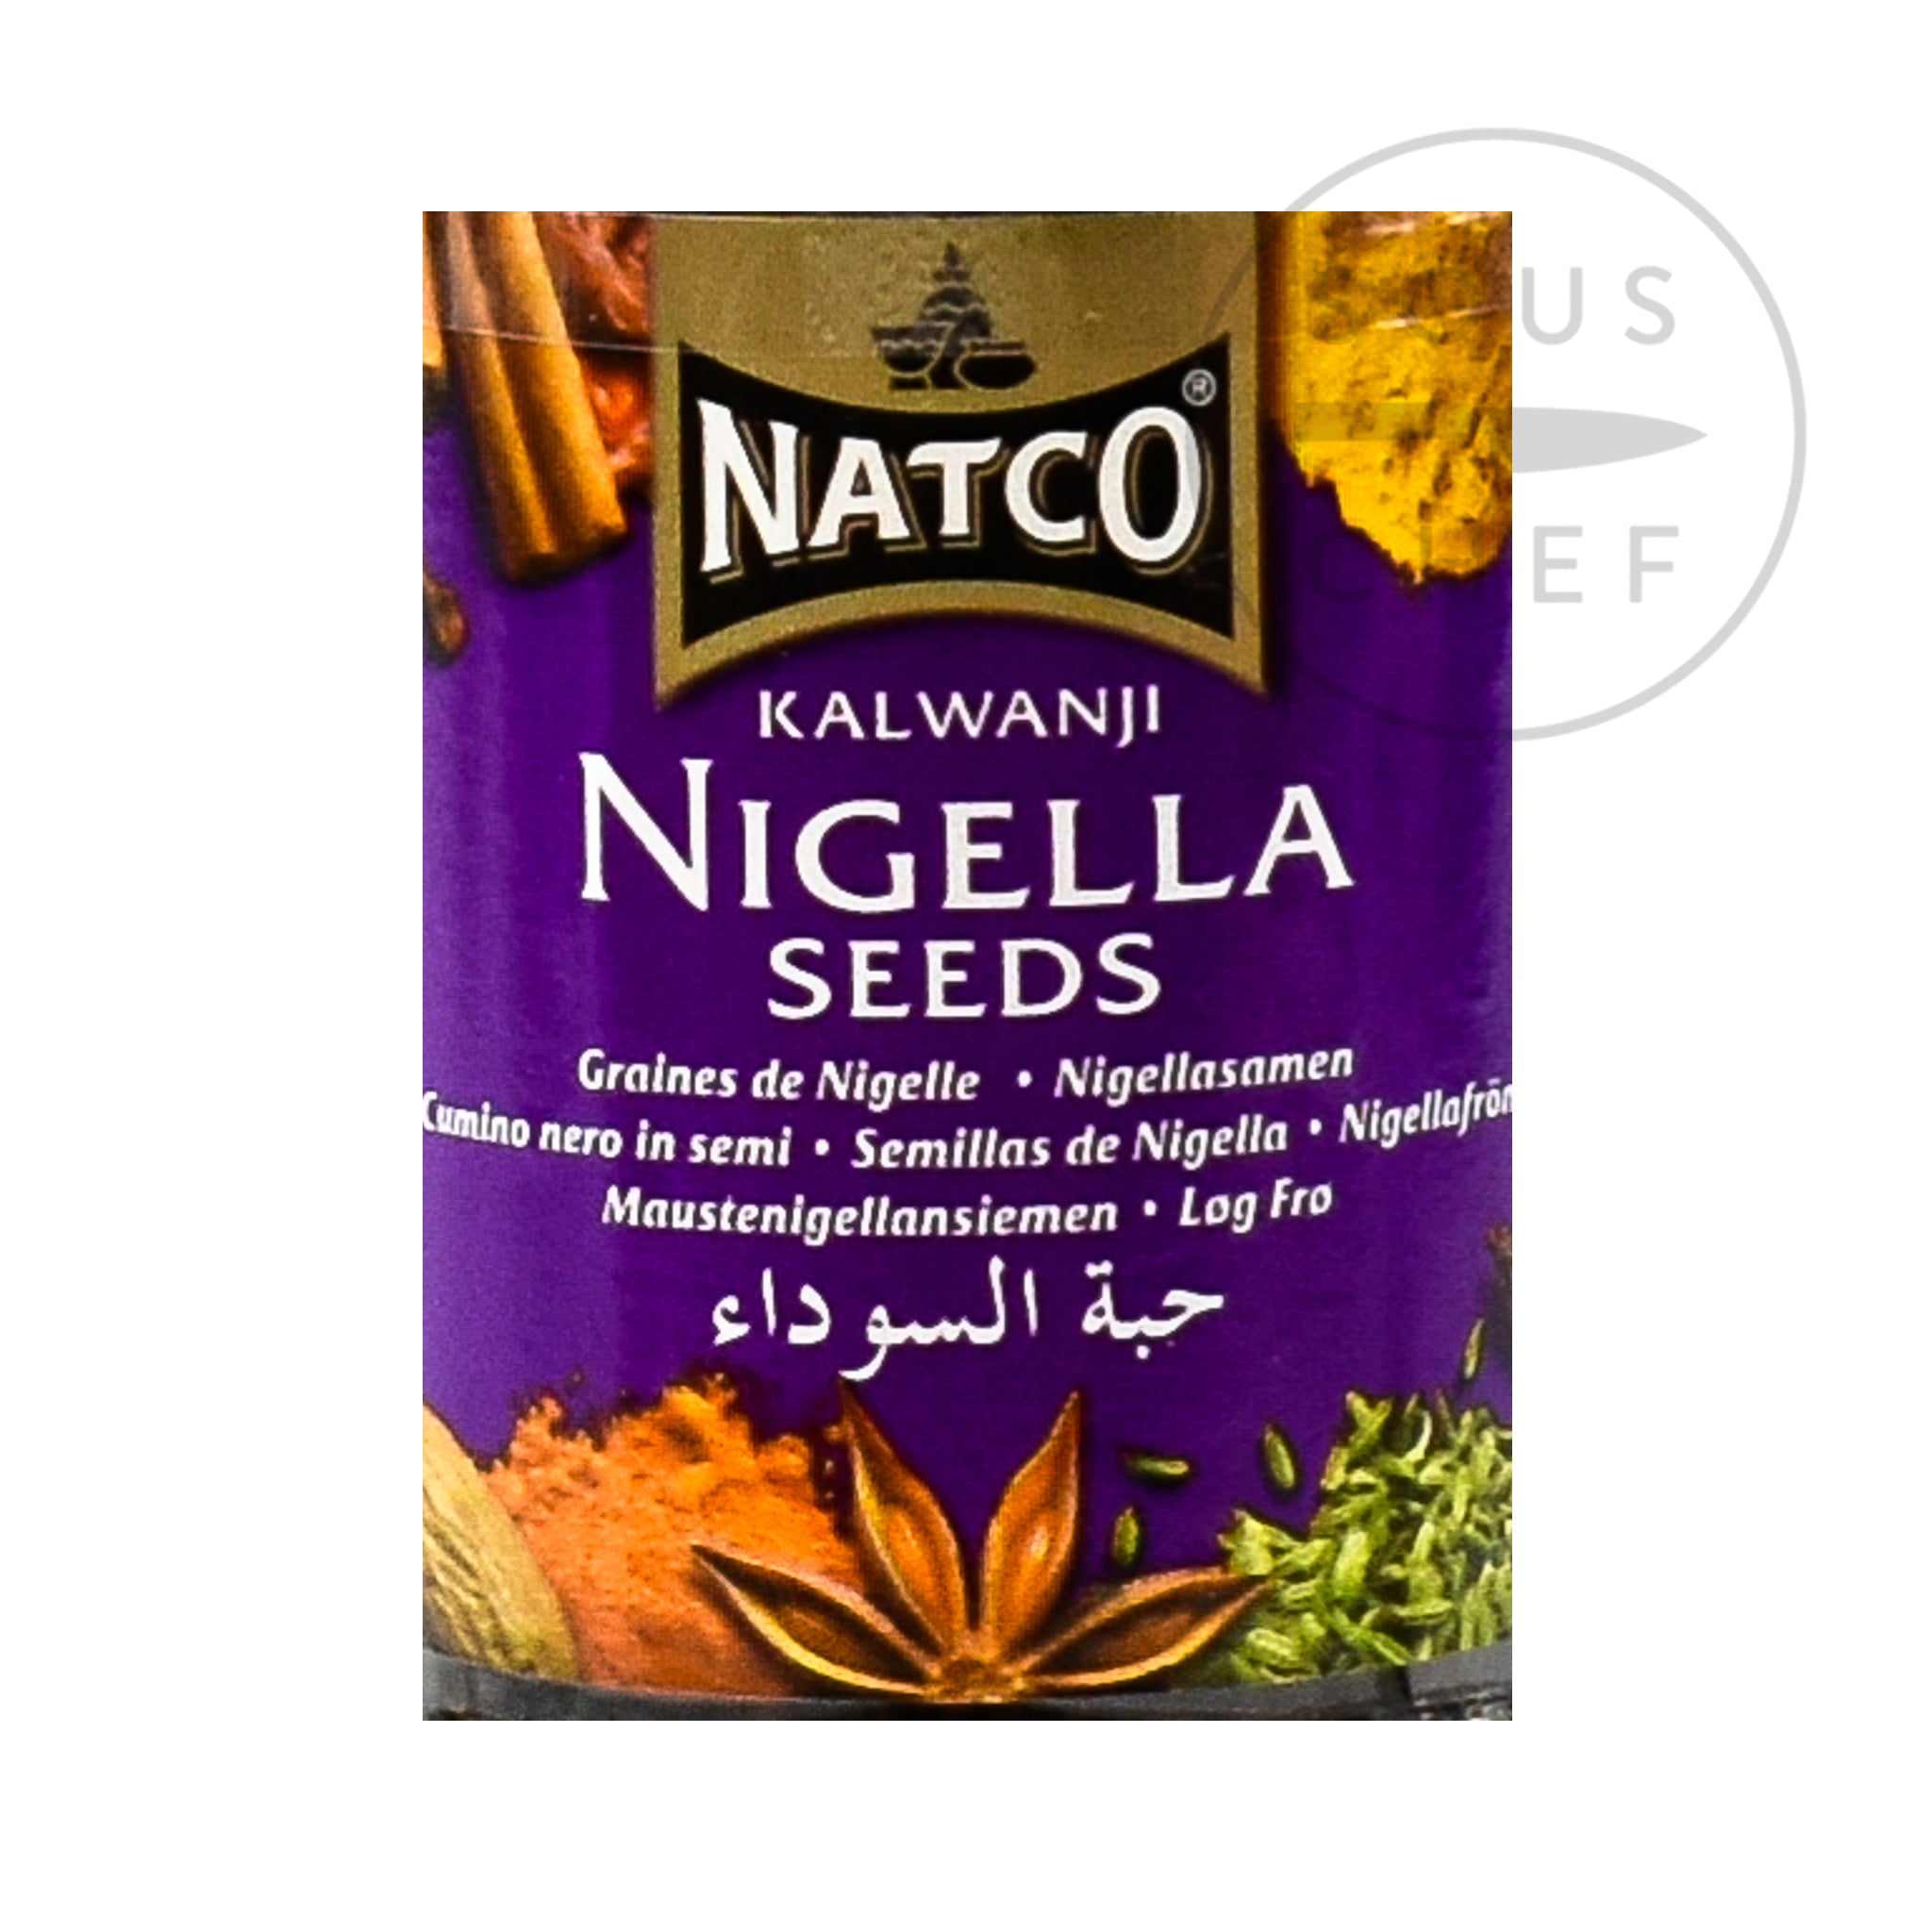 Natco Nigella Seeds, 100g